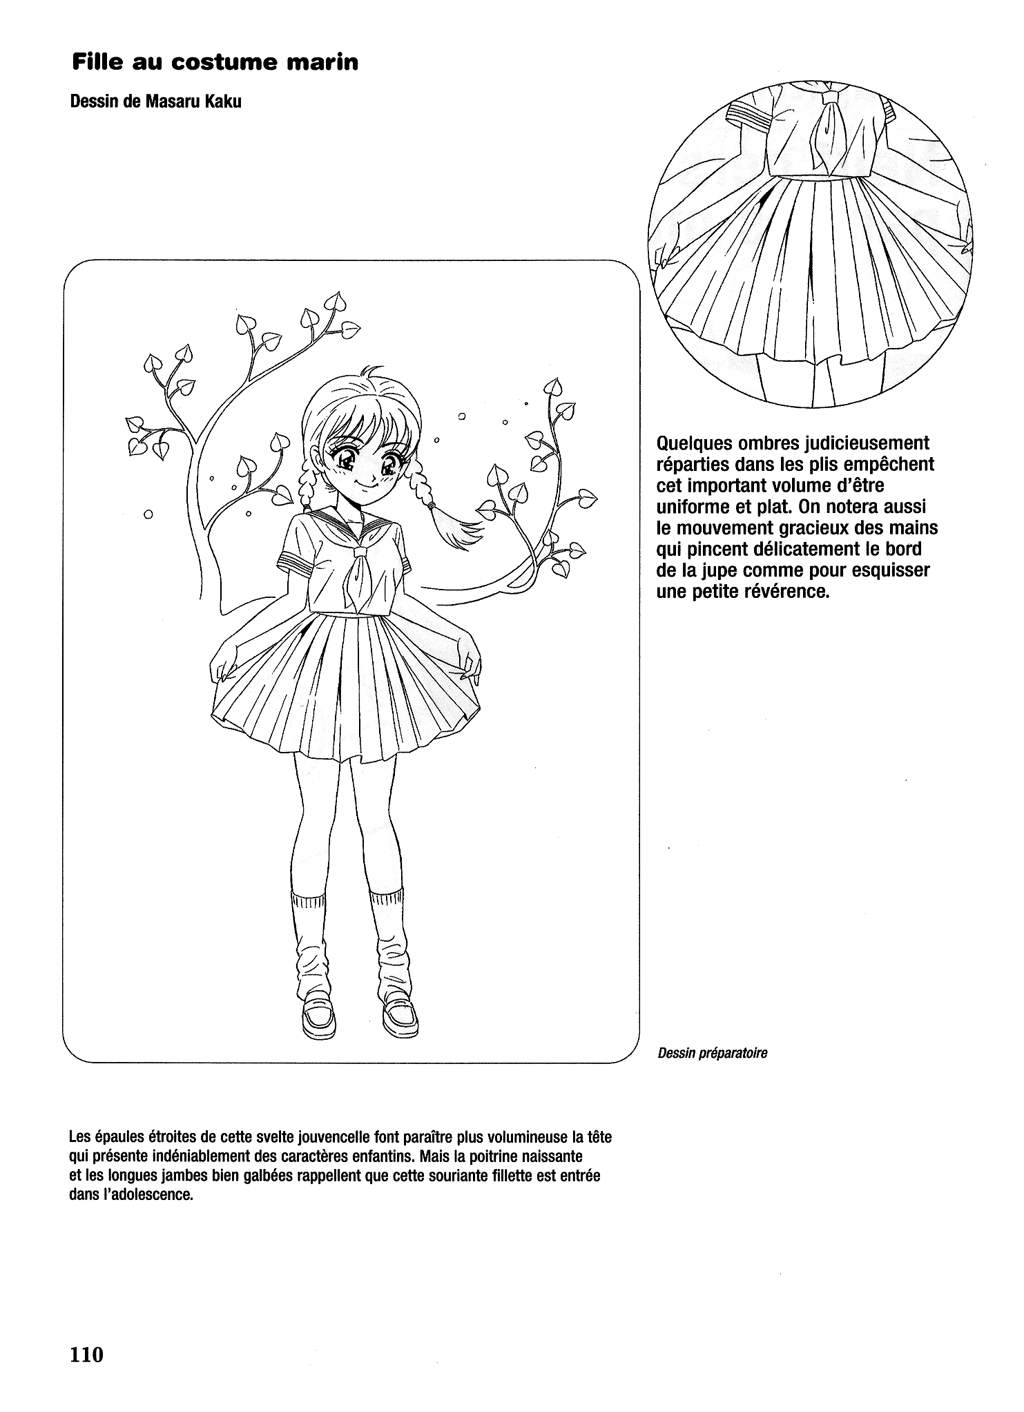 Le dessin du Manga 04 - Personnages feminin, Attitudes, Expressions numero d'image 110